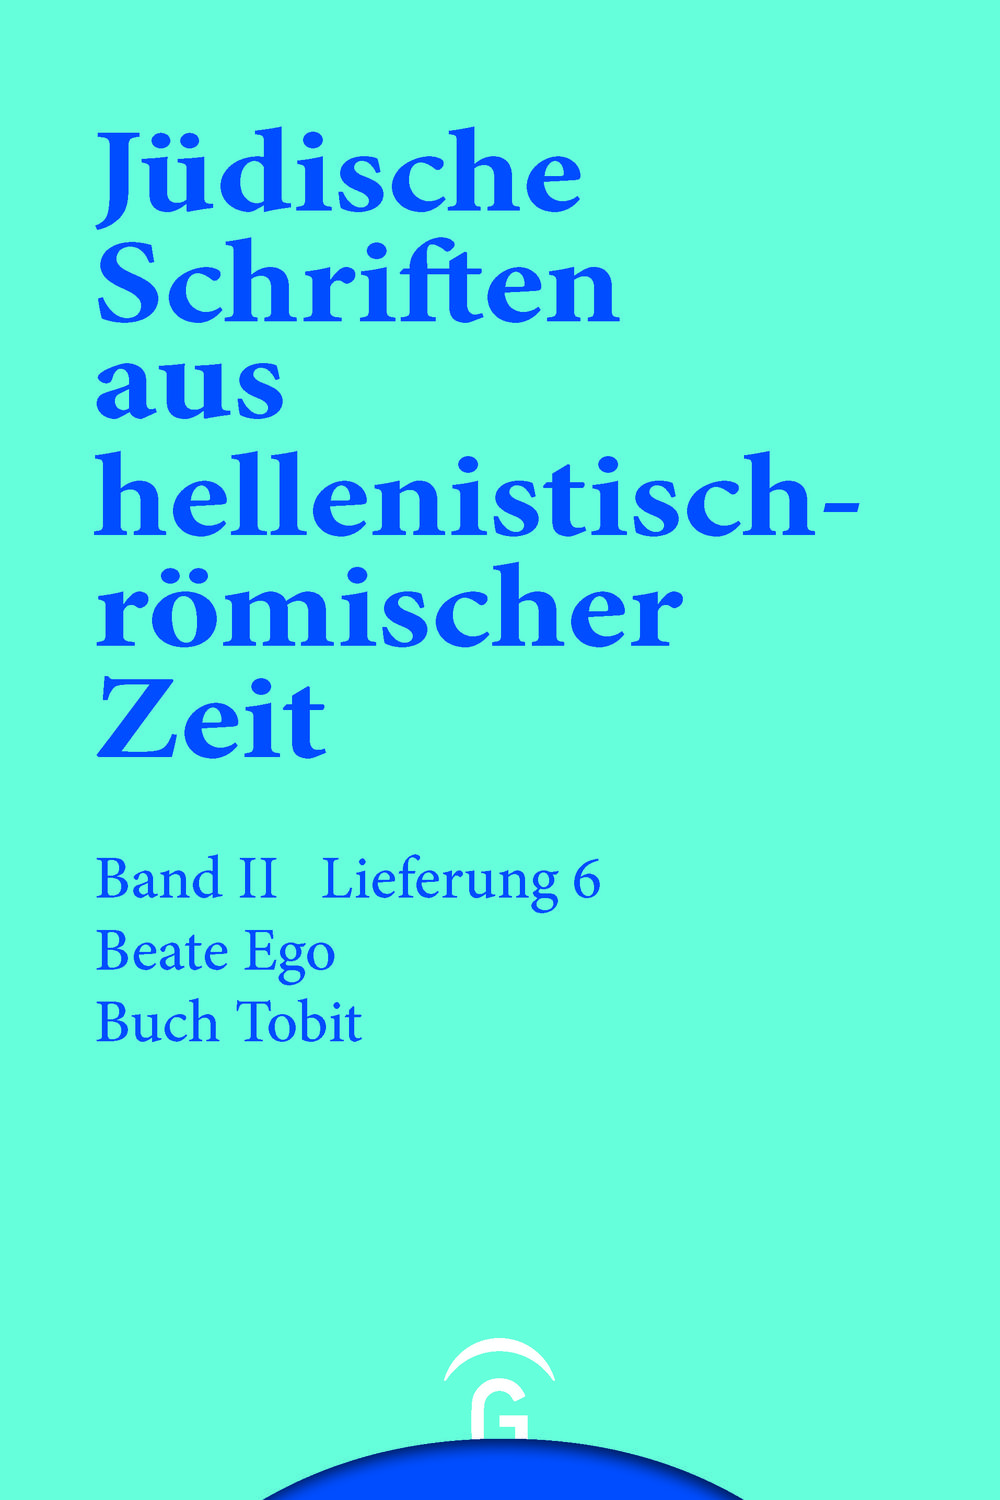 Buch Tobit - Beate Ego, Werner Georg Kümmel